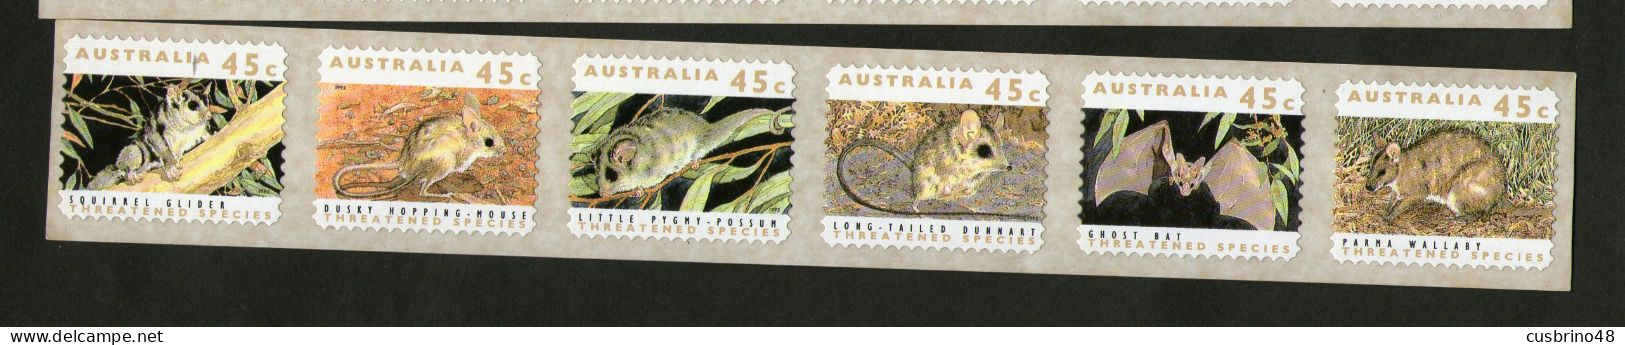 AUSTRALIA 1992 P & S Strip 45c Endangered Species Strip 6 PRINTSET 1 Koala Reprint. - Lot  AUS 236 - Ongebruikt